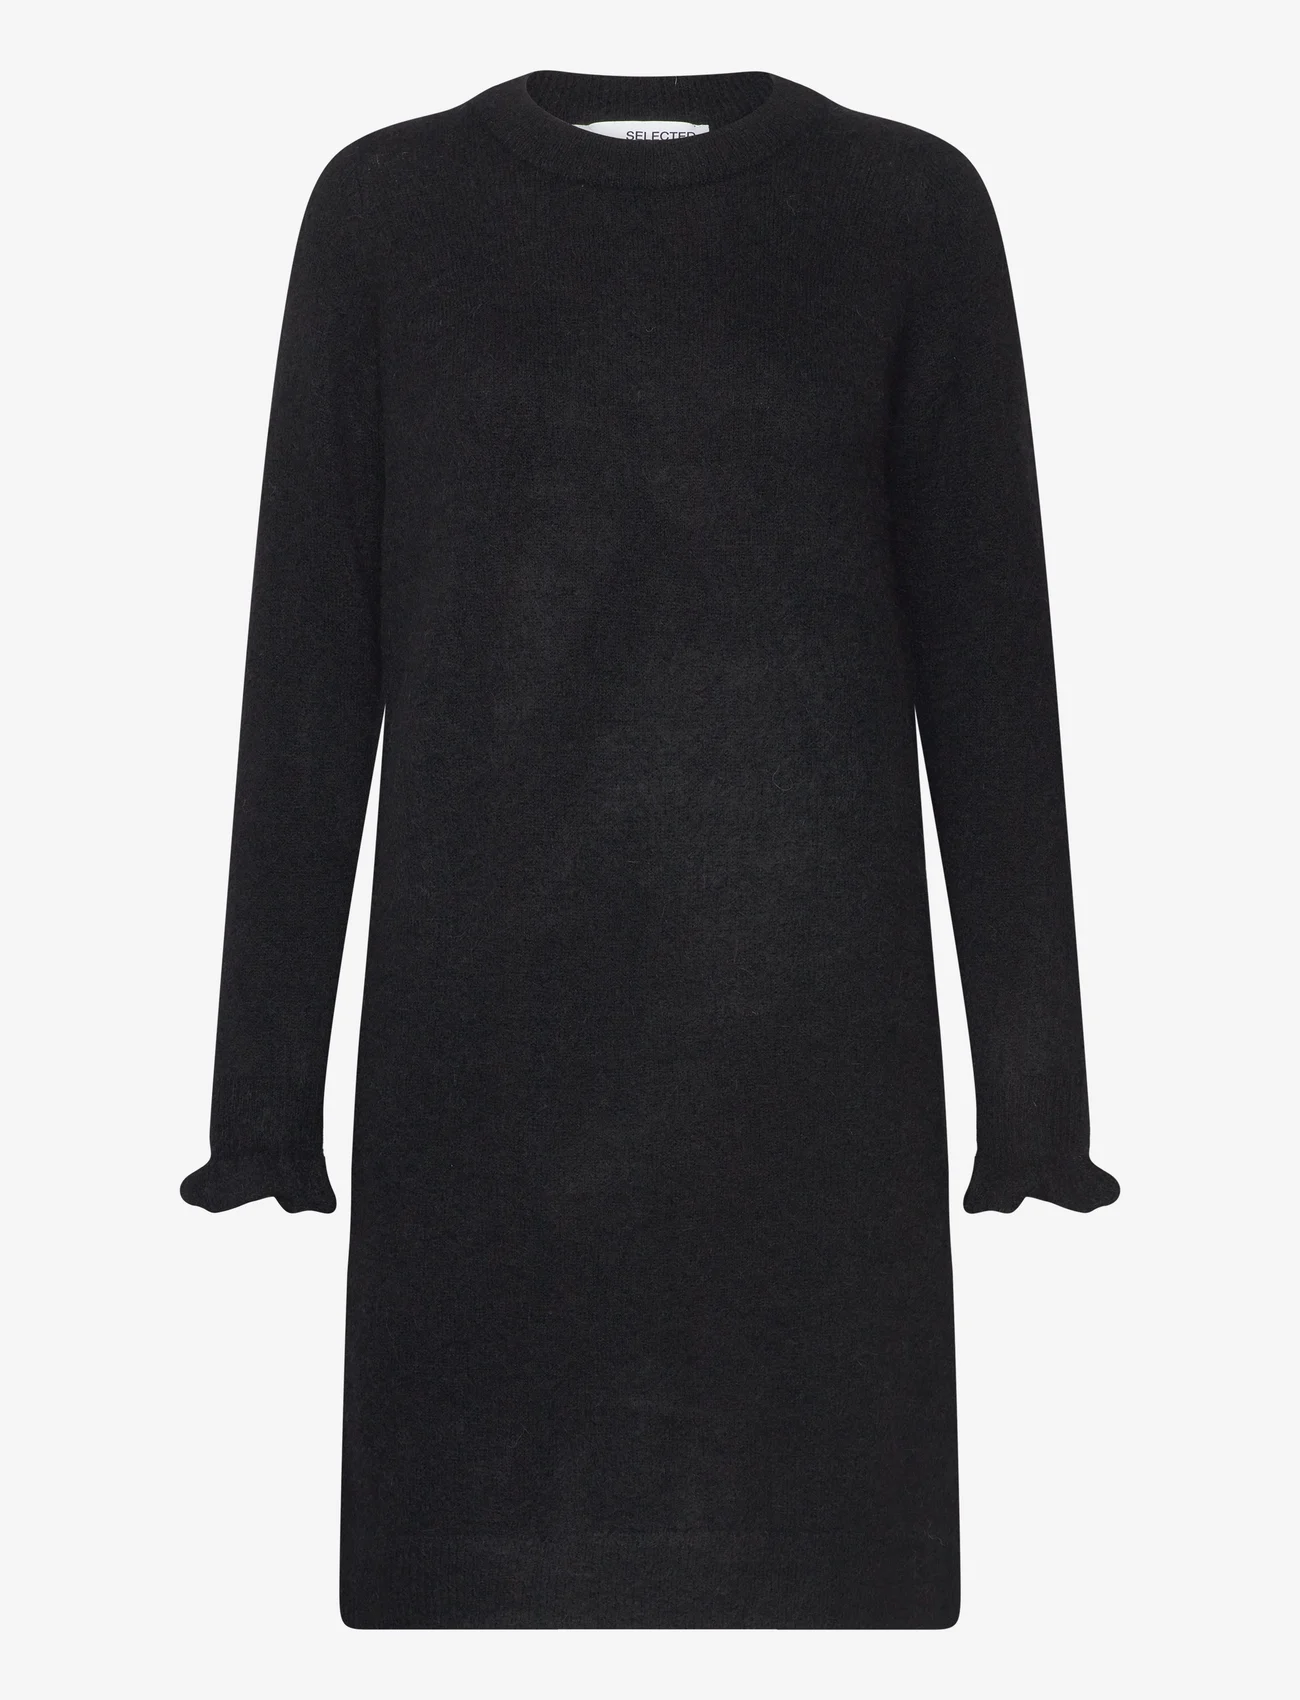 Selected Femme - SLFSIA RAS FRILL LS KNIT DRESS - adītas kleitas - black - 0